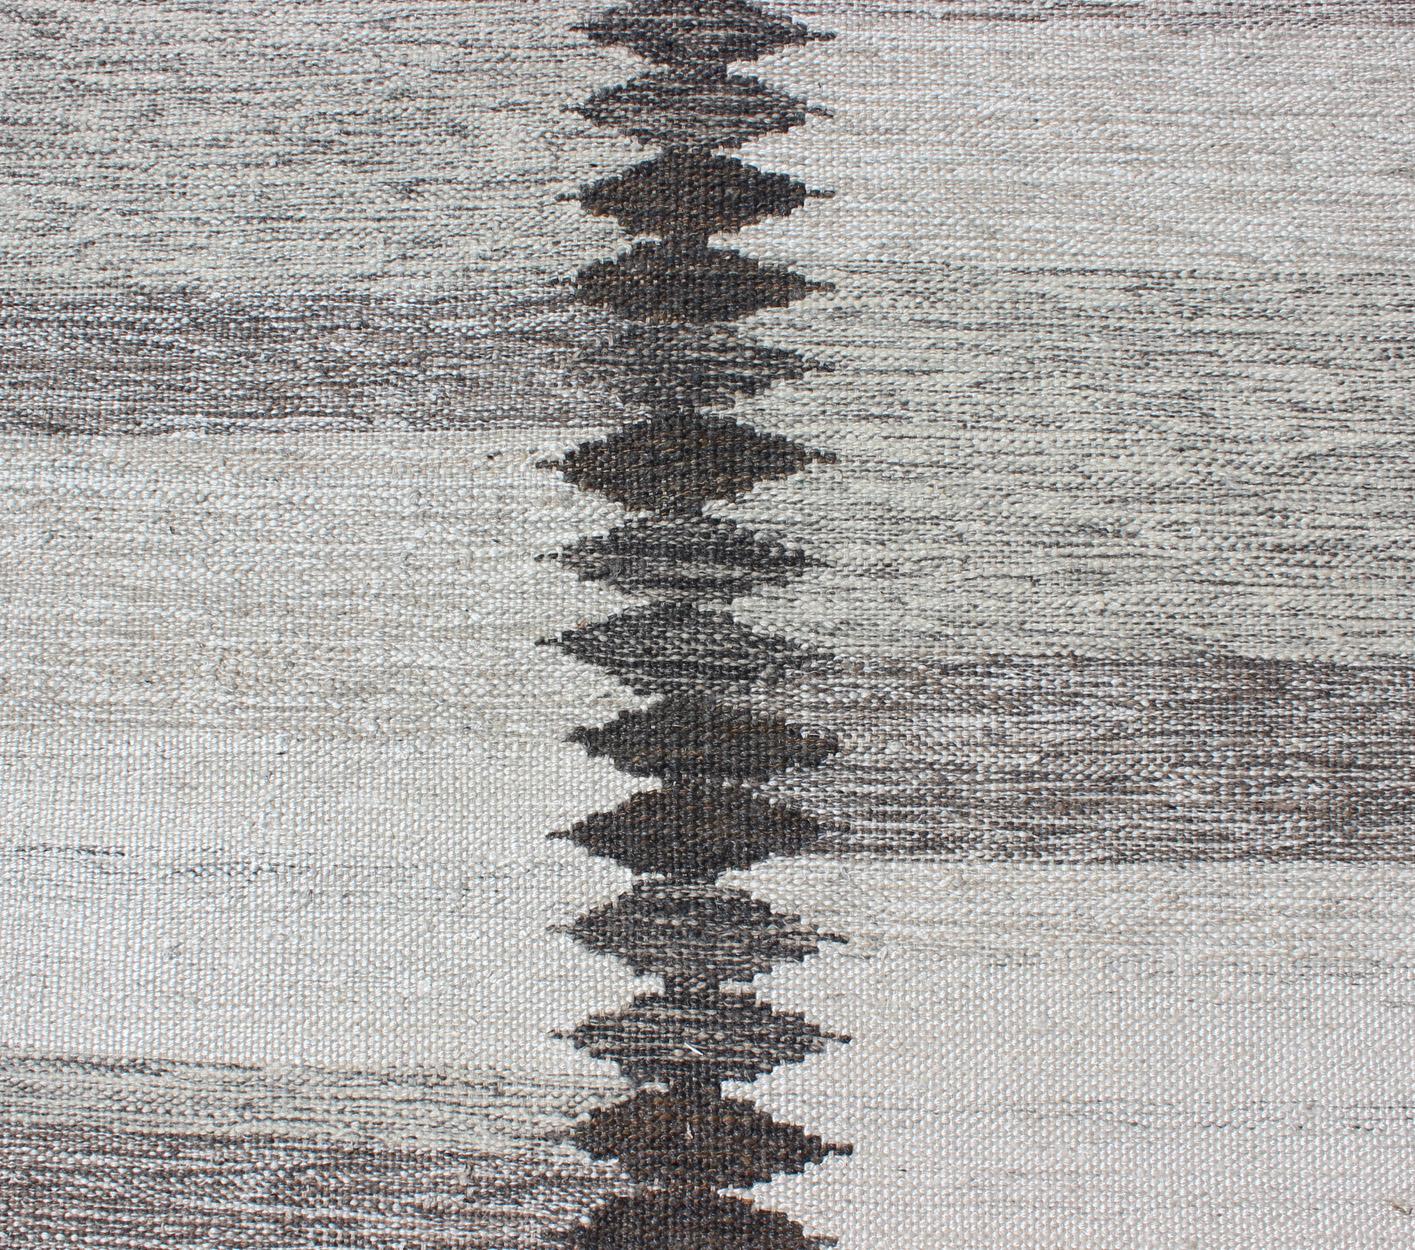 Hand-Woven Modern Scandinavian Flat-Weave Rug with Geometric Stripe Design in Gray Tones